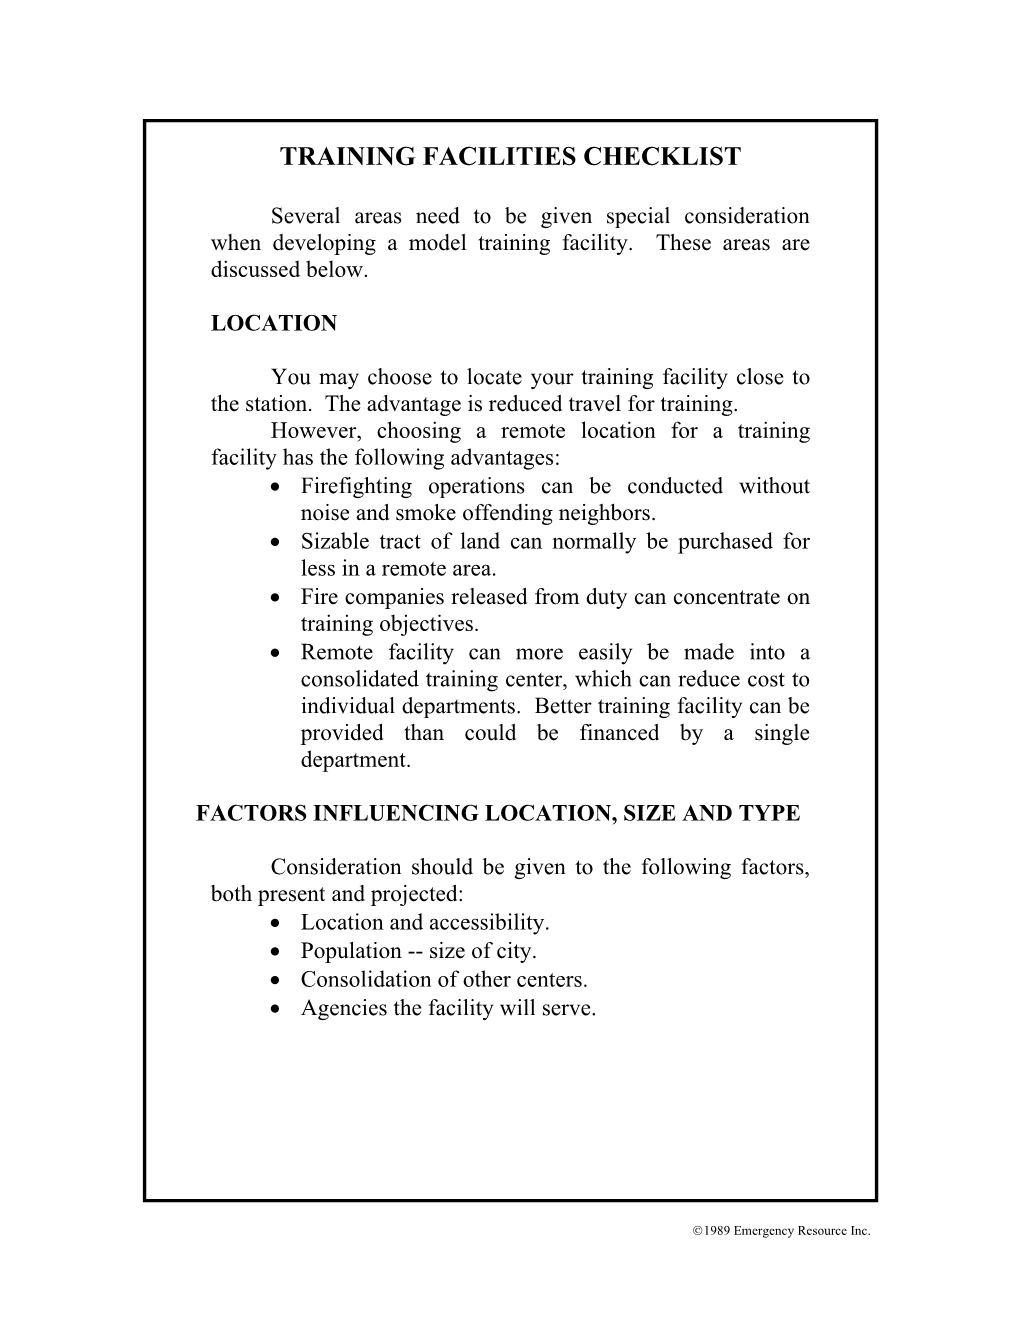 Training Facilities Checklist